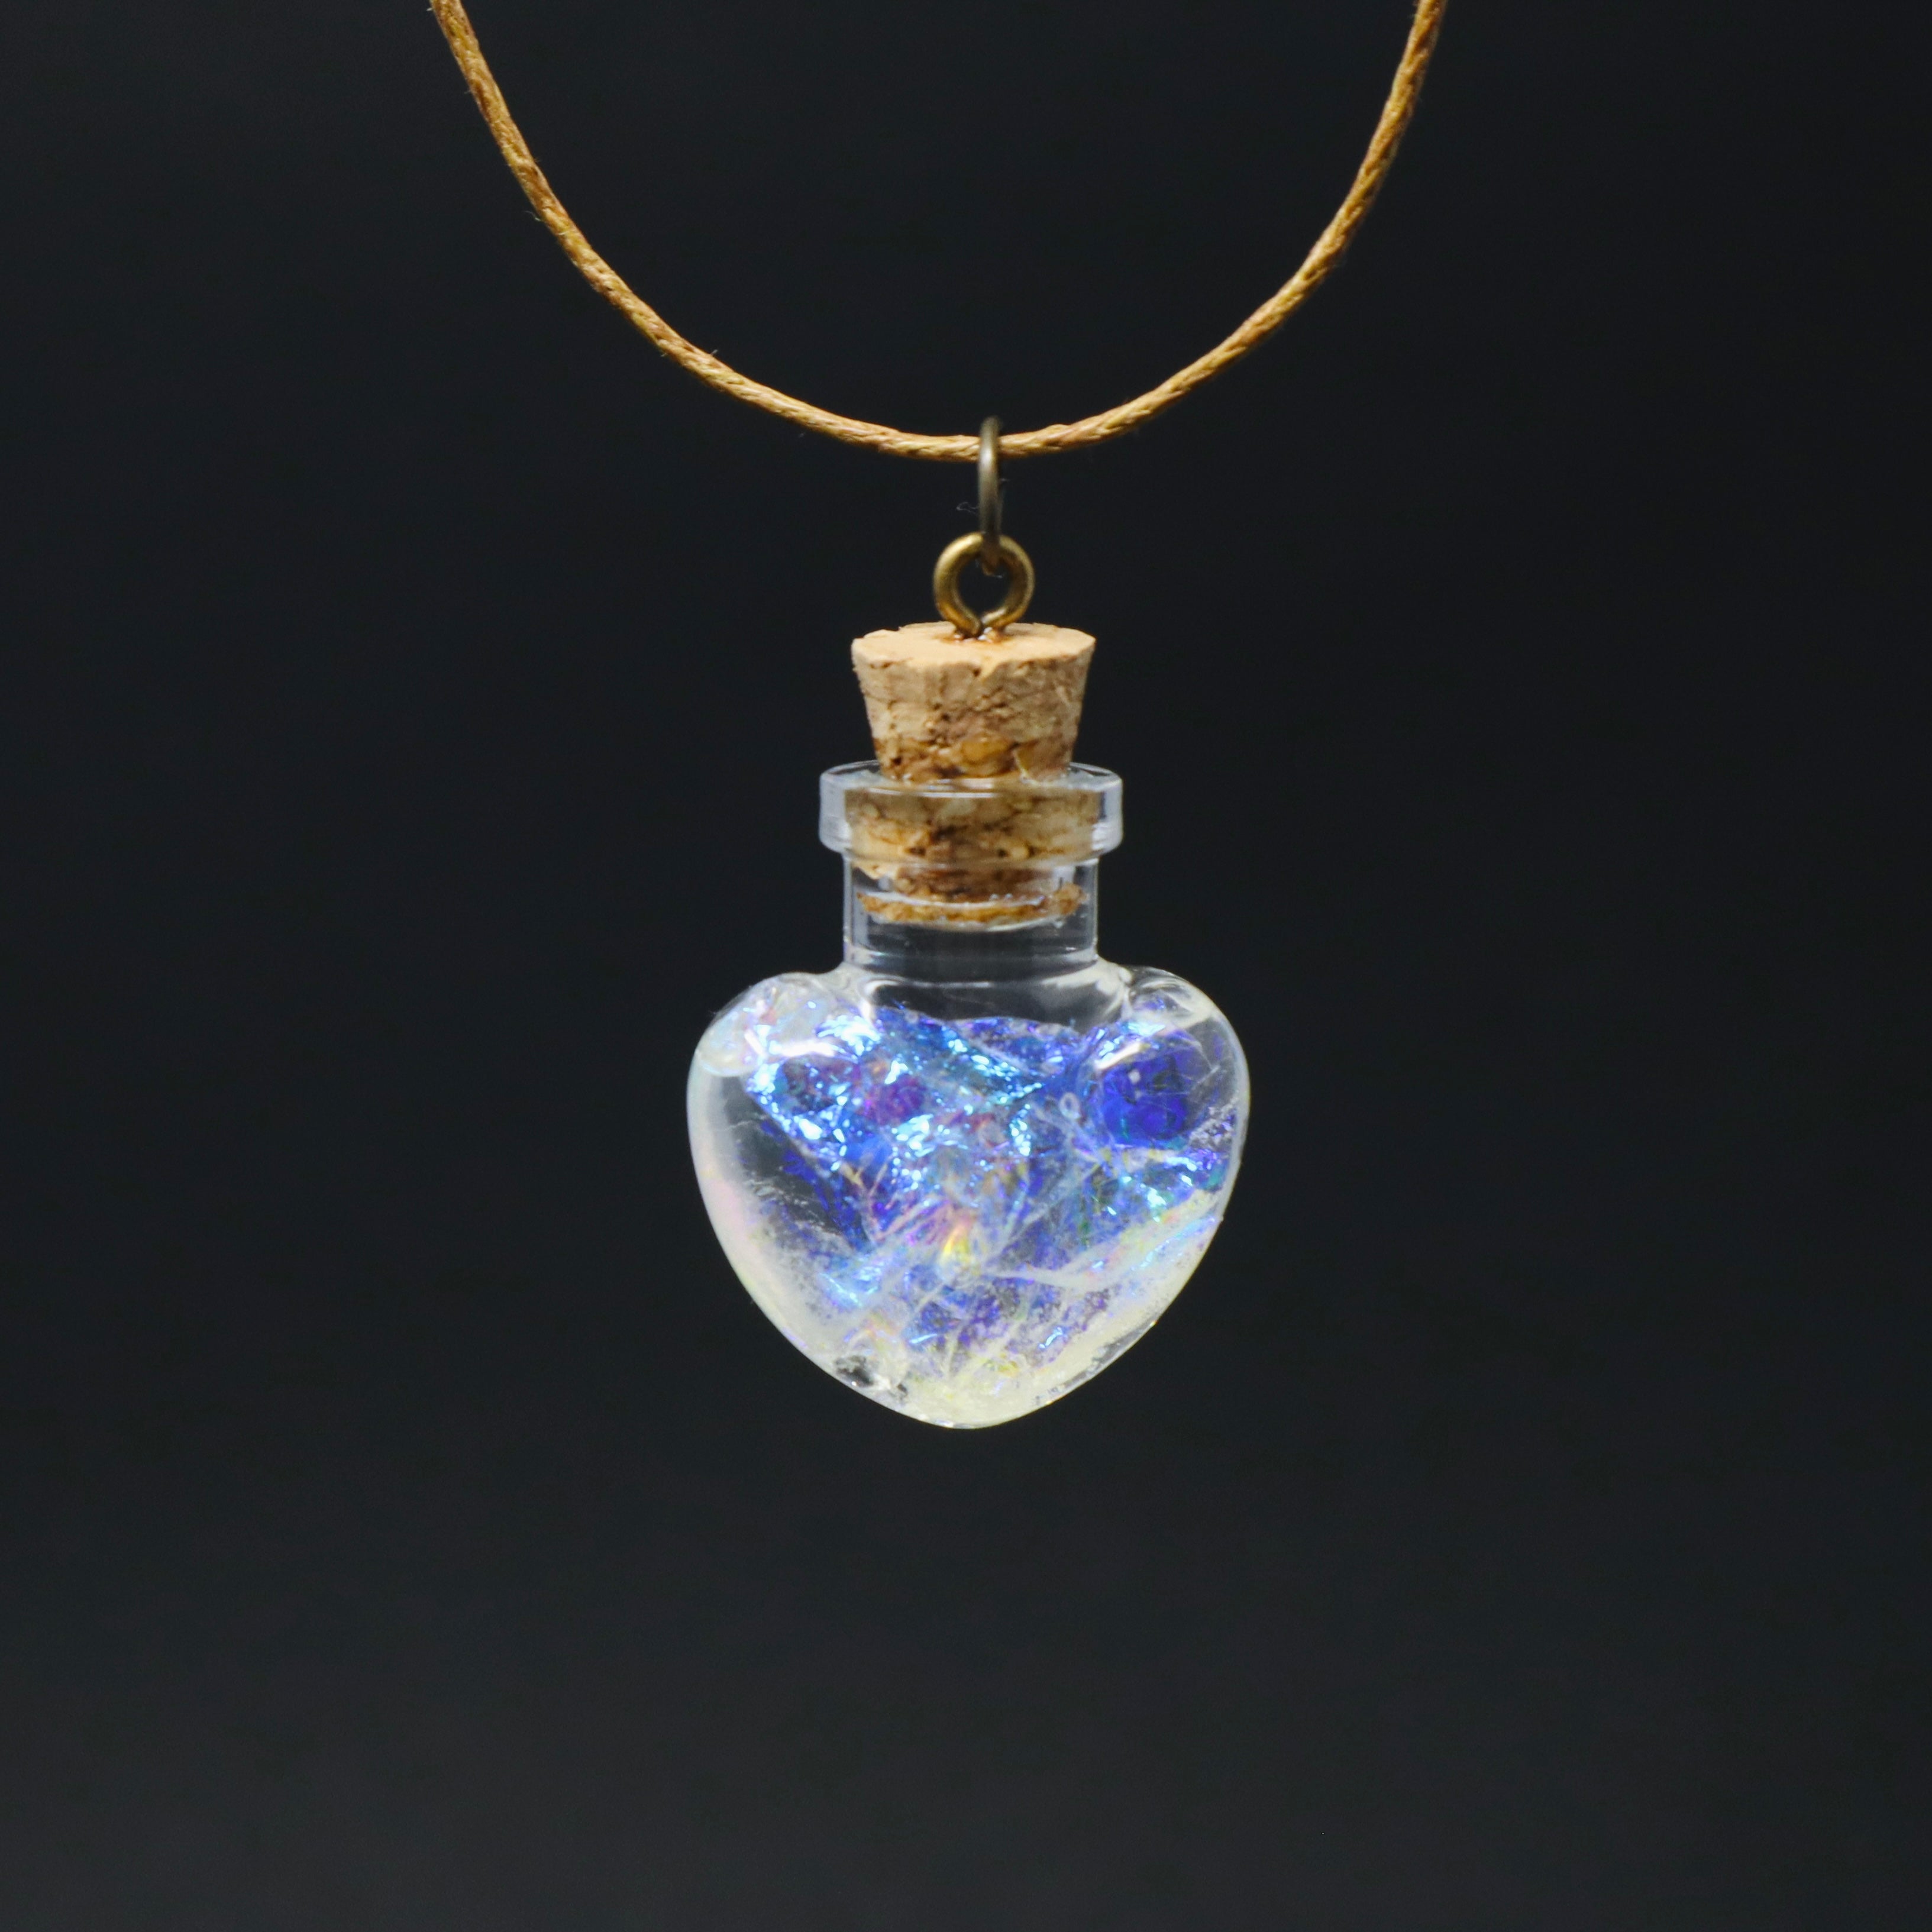 Glow in dark witch jewelry pendant potion bottle necklace Love potion #9 |  eBay